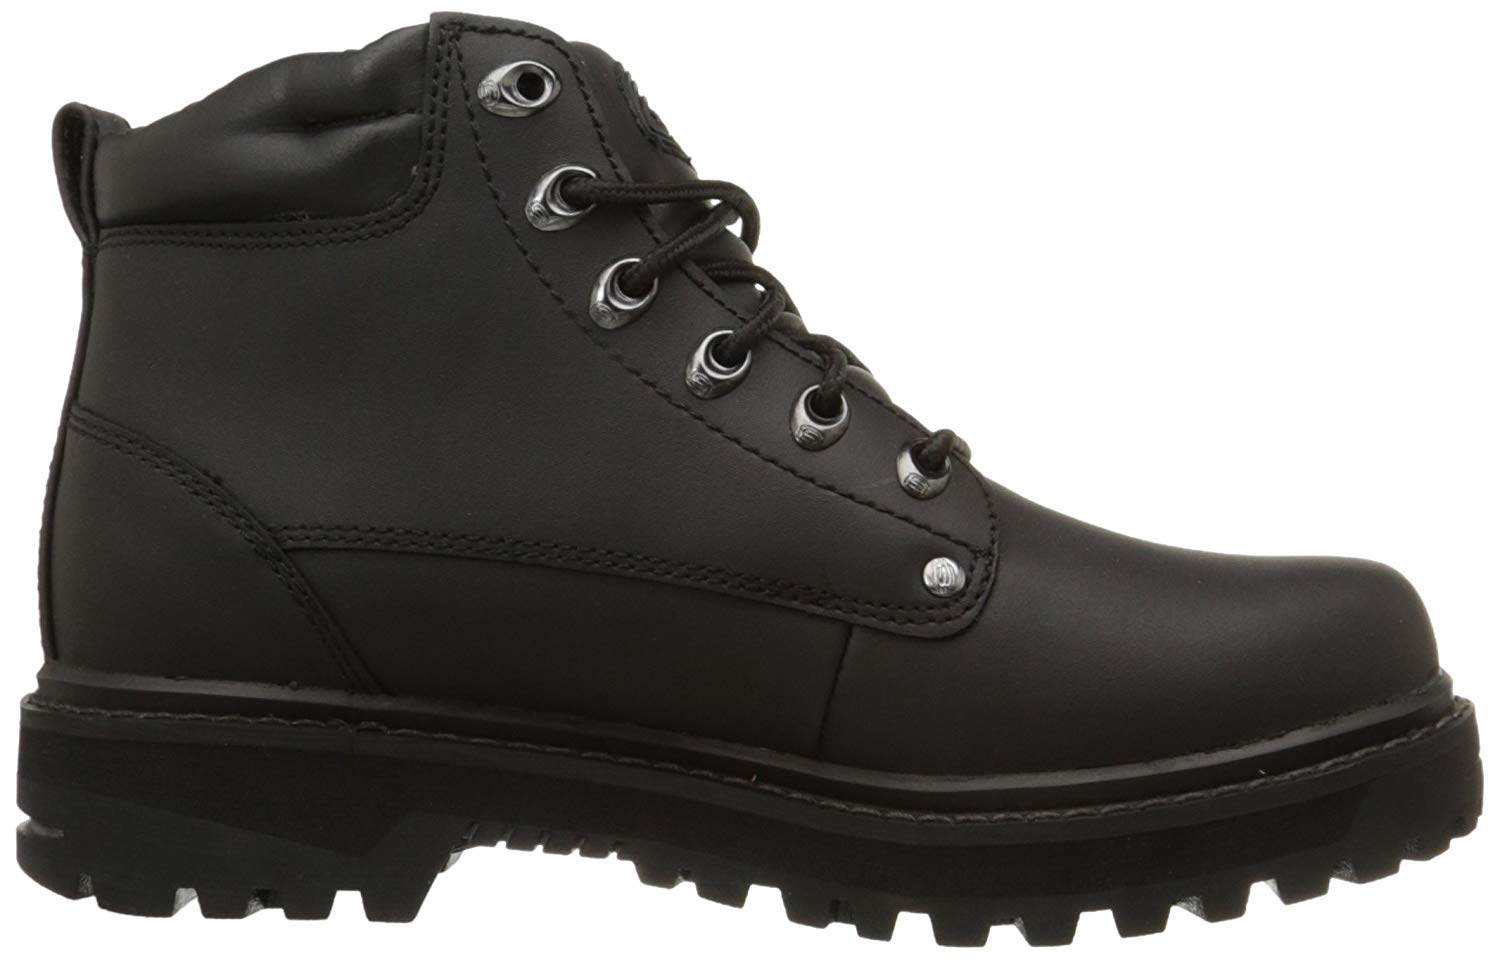 Skechers Men's Pilot Utility Boot, Black, Size 10.5 bwDF | eBay